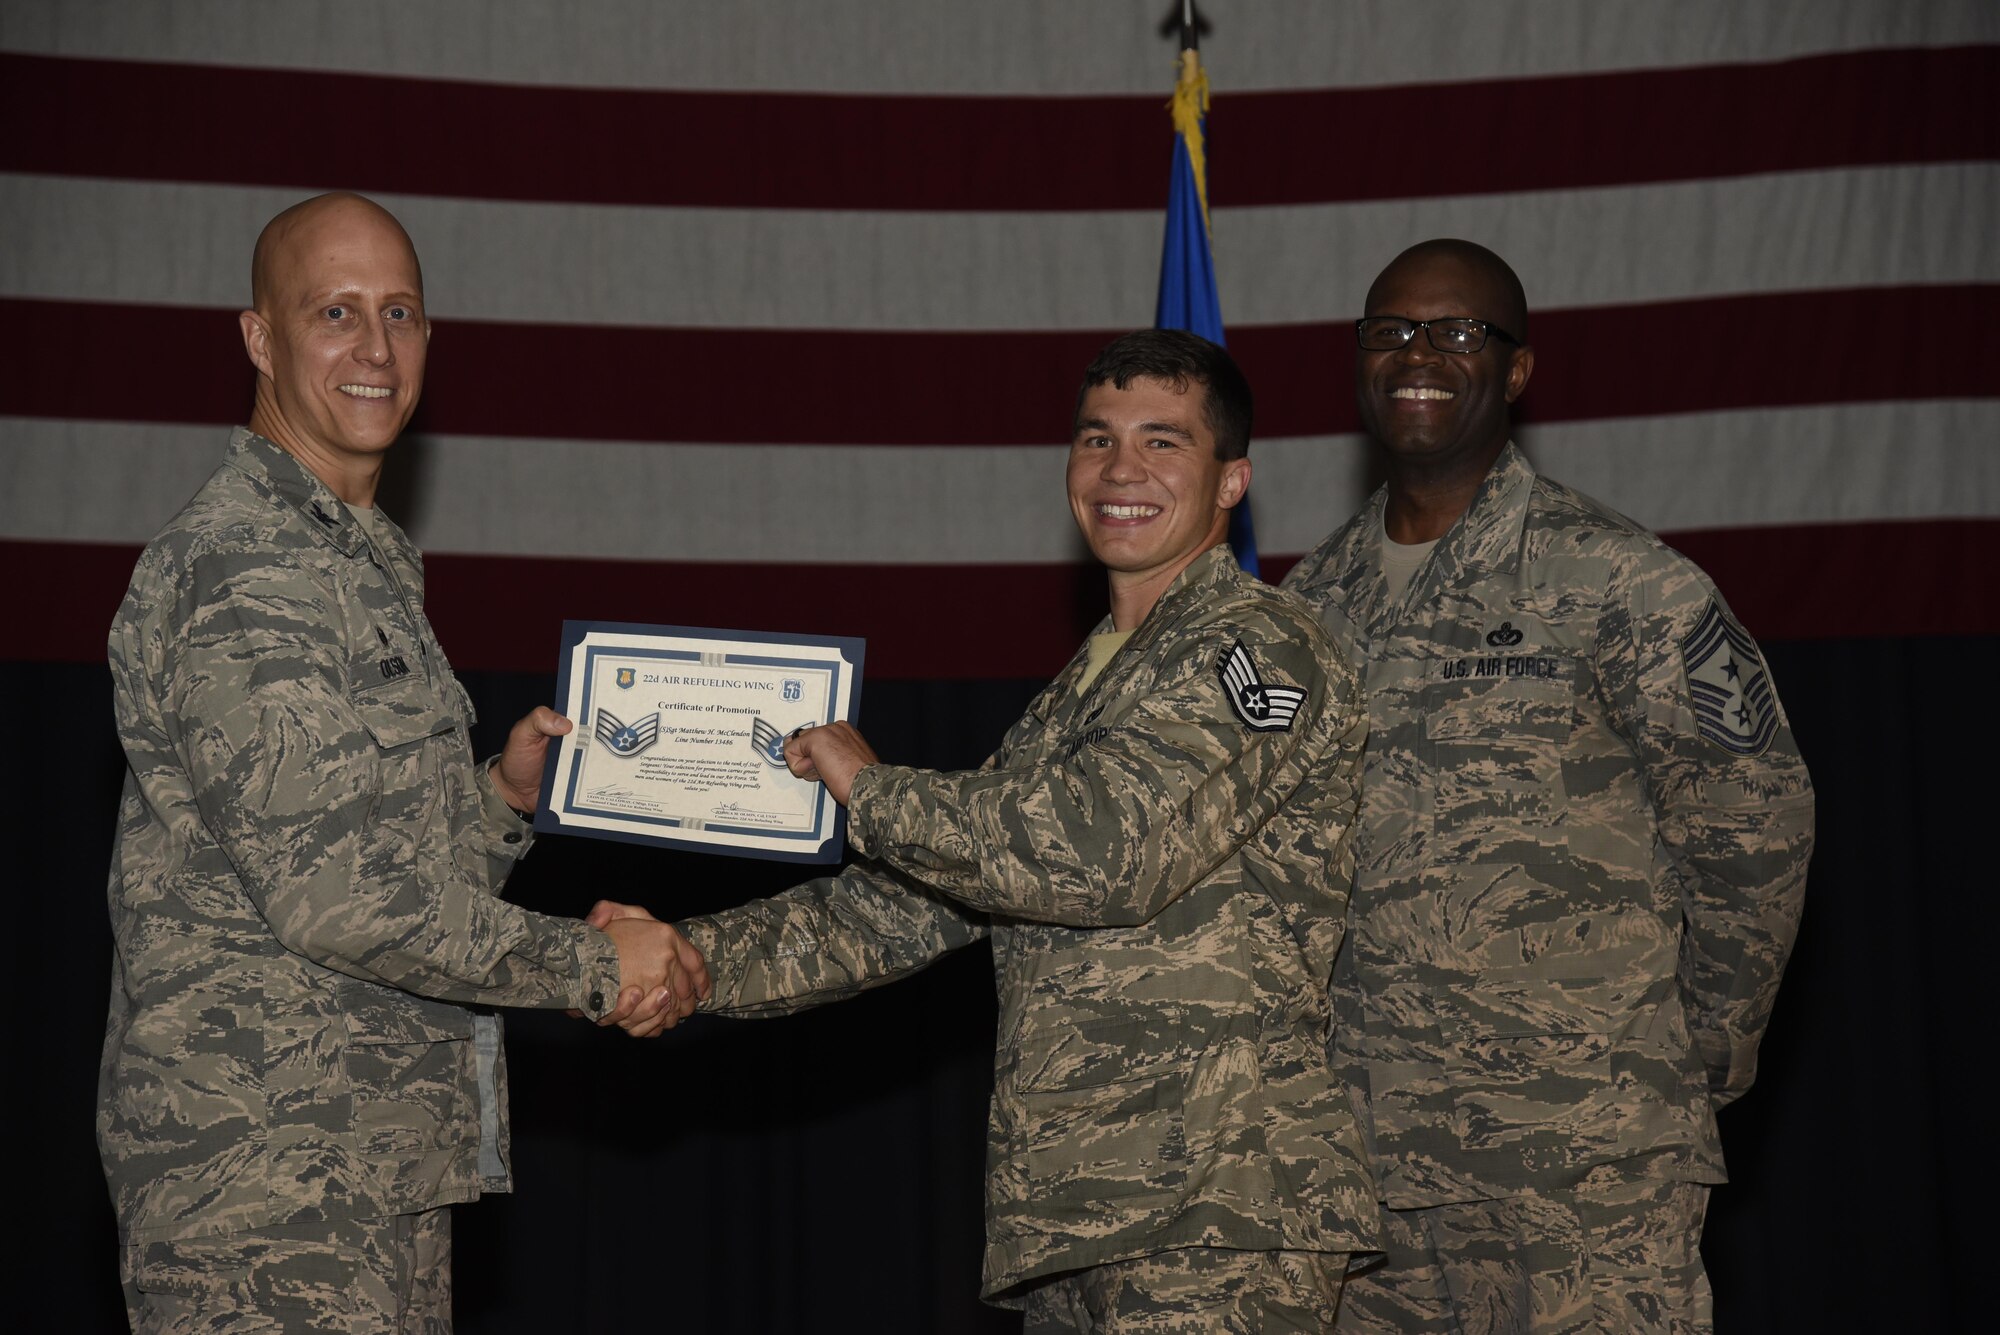 Airman receives certificate